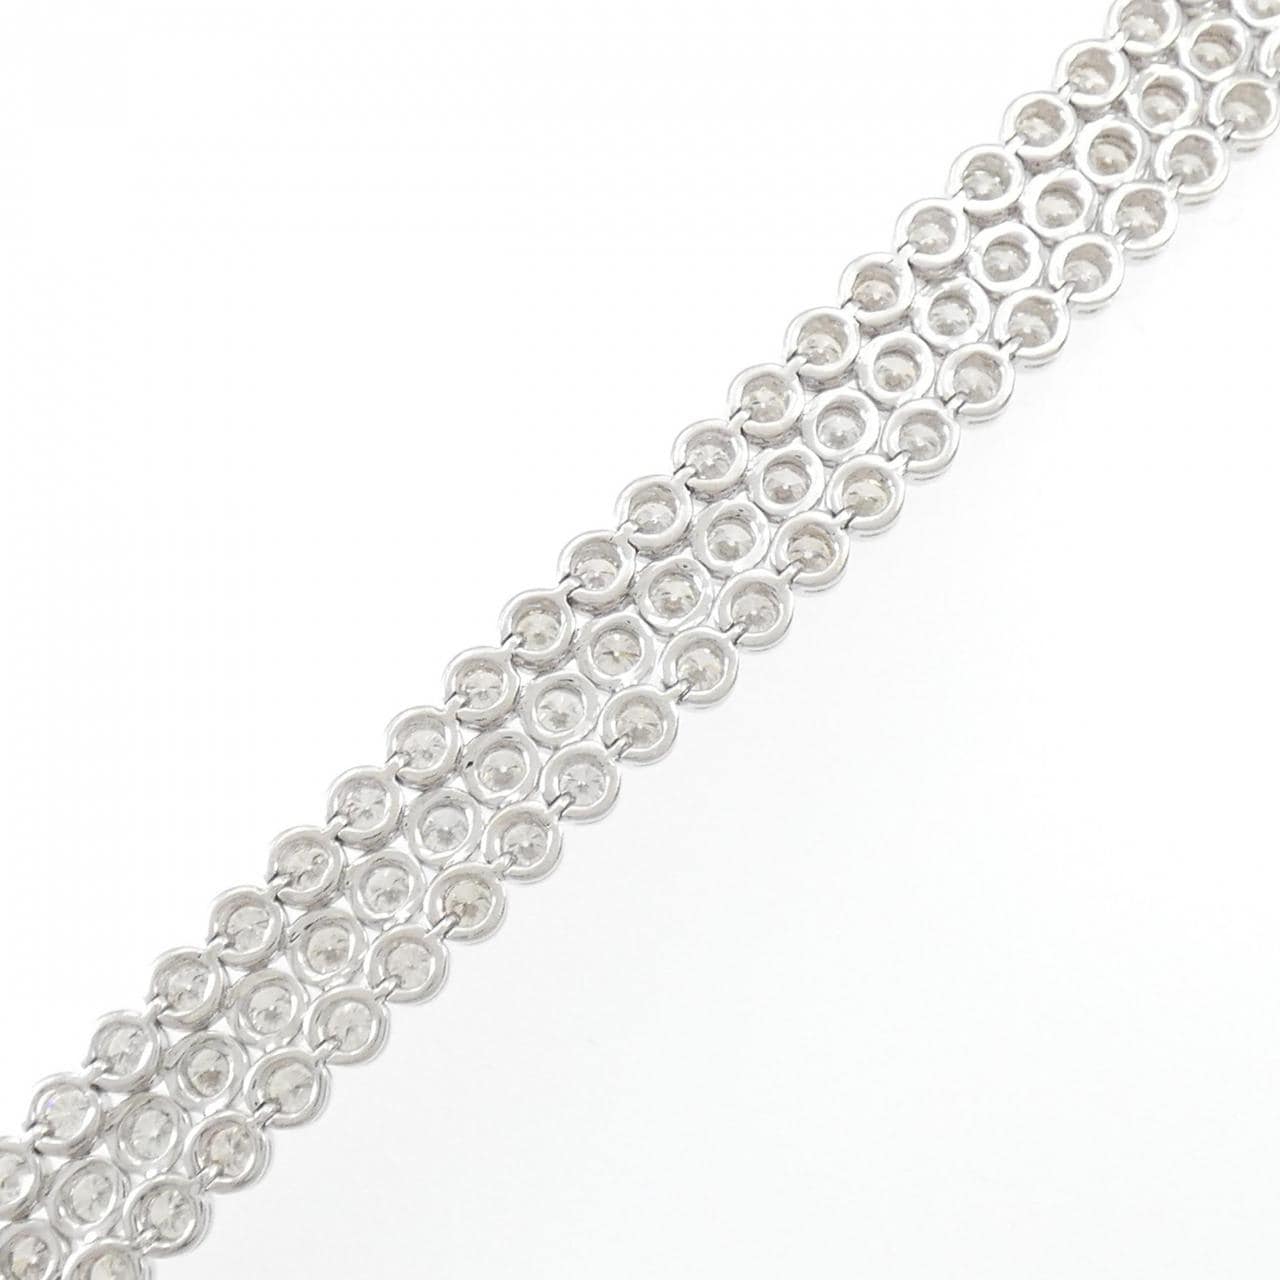 K18WG Diamond Bracelet 8.89CT